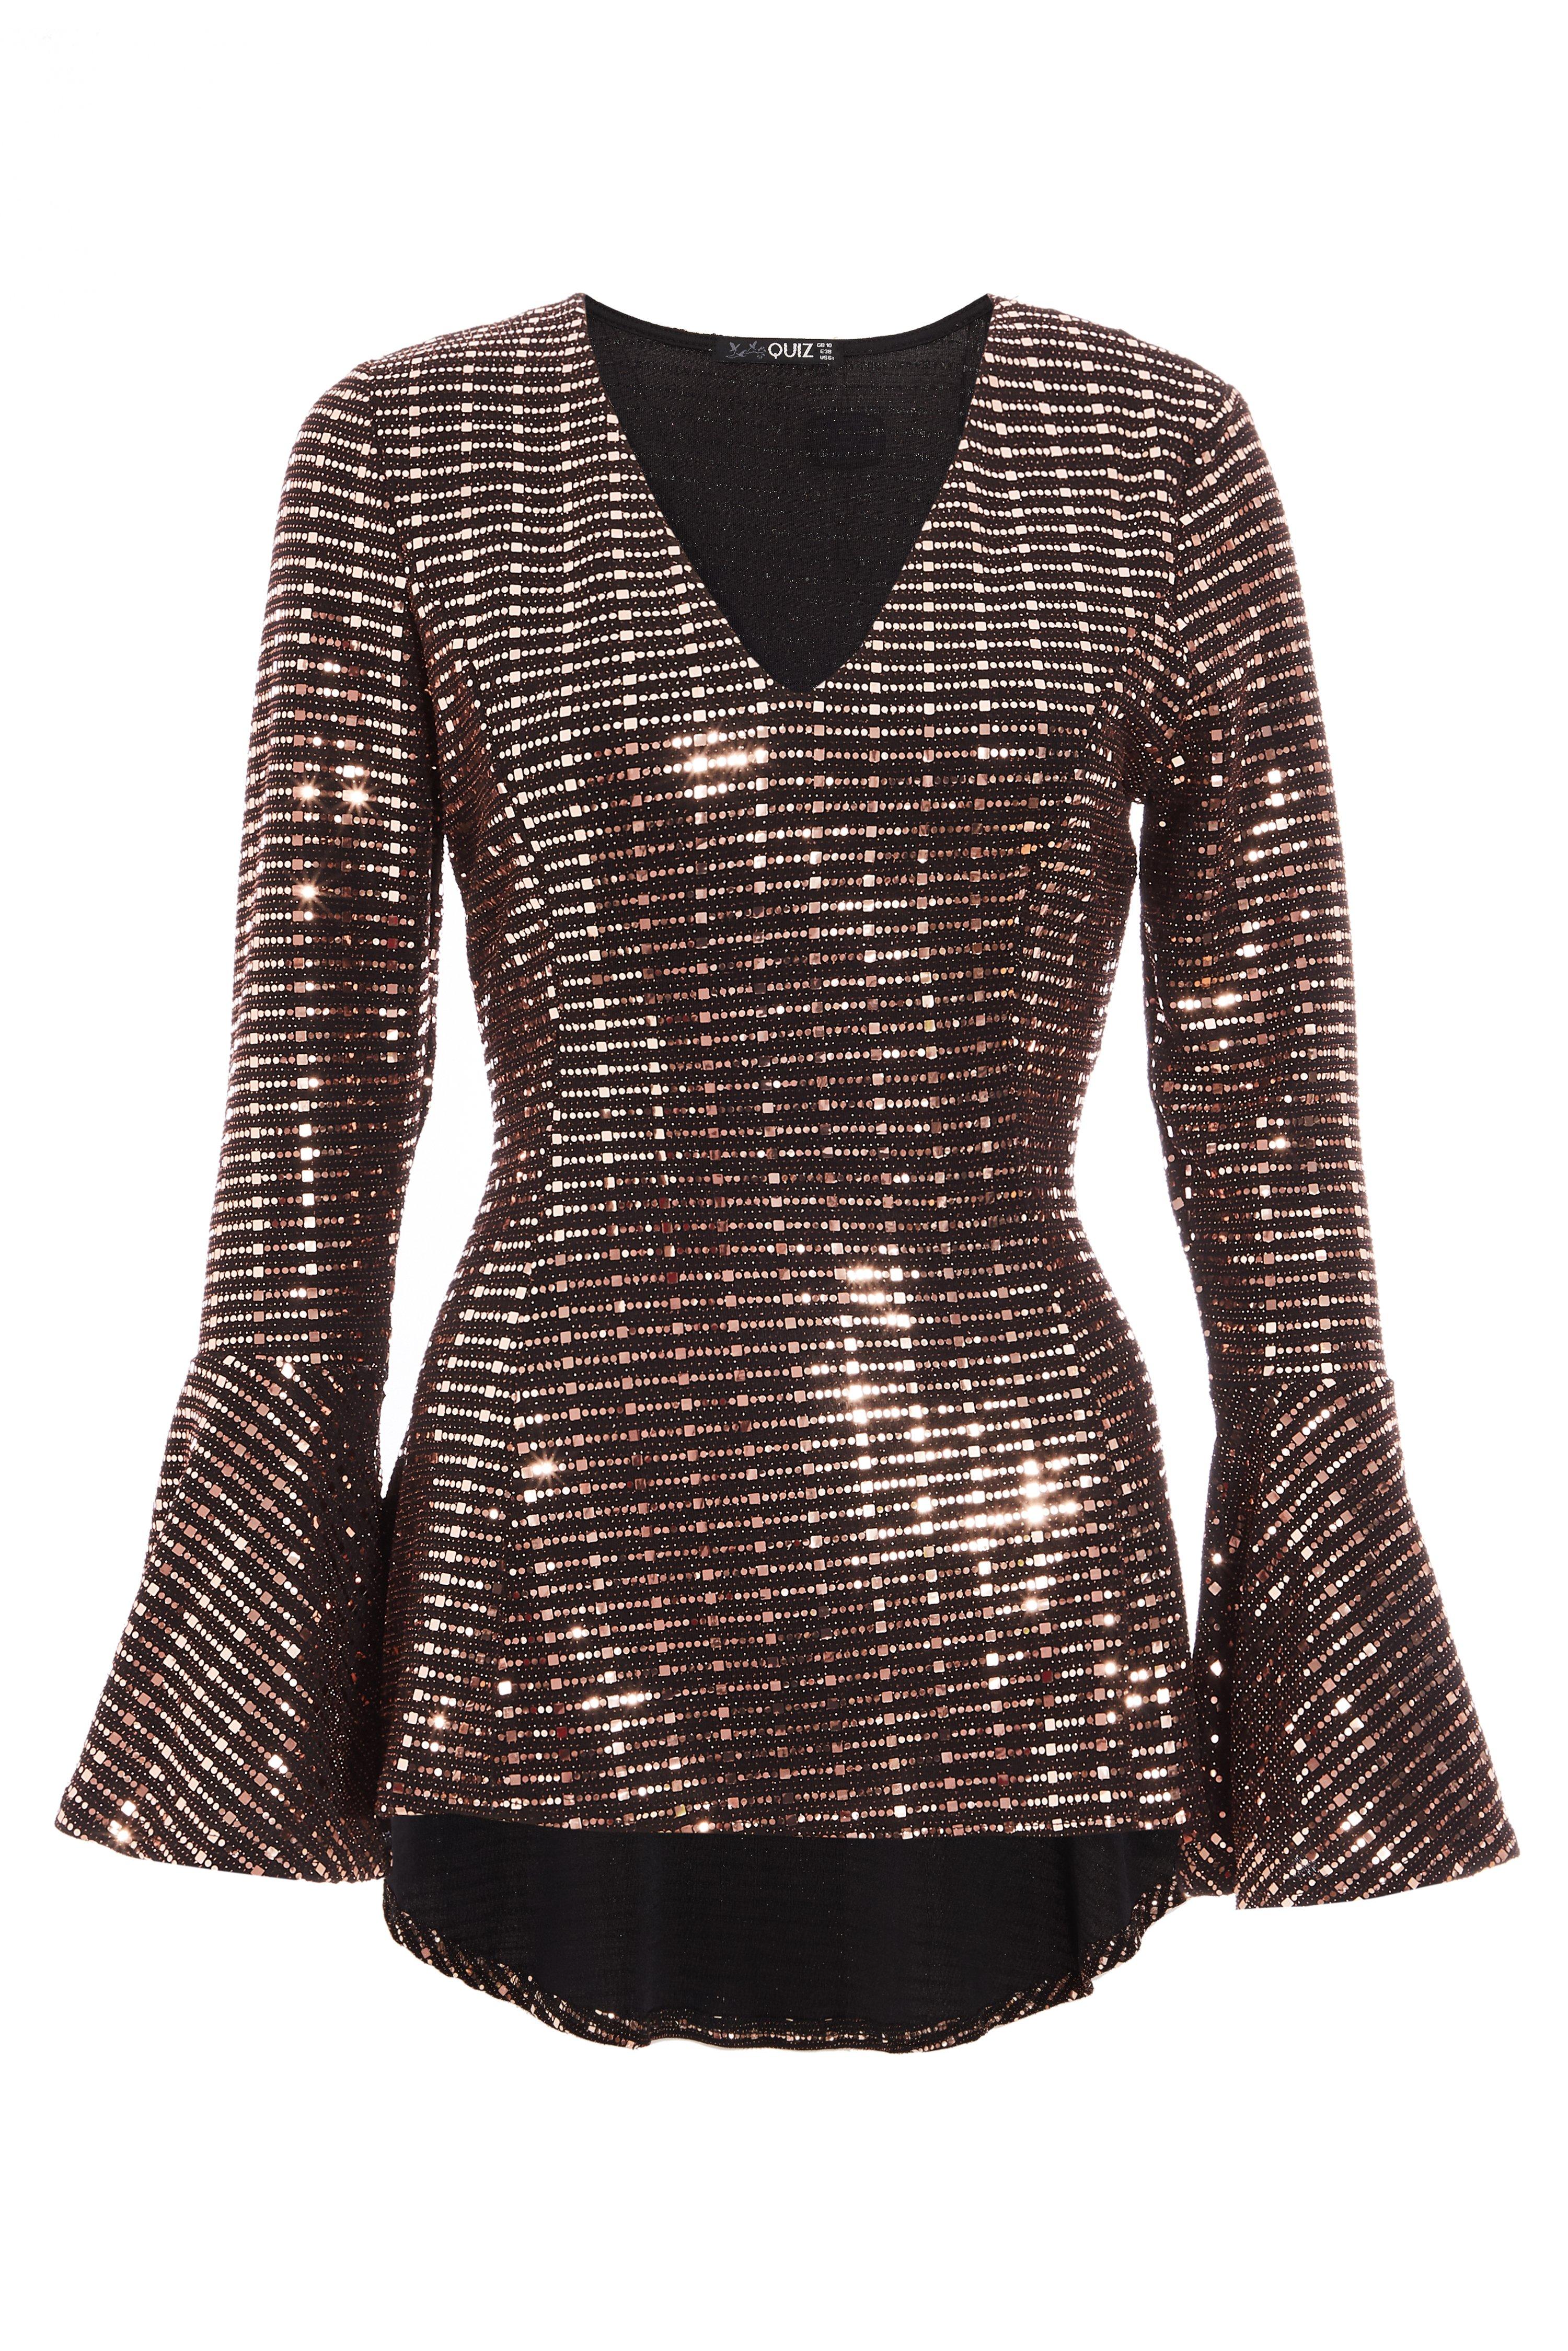 Black and Bronze Sequin V Neck Flute Sleeve Peplum Top - Quiz Clothing